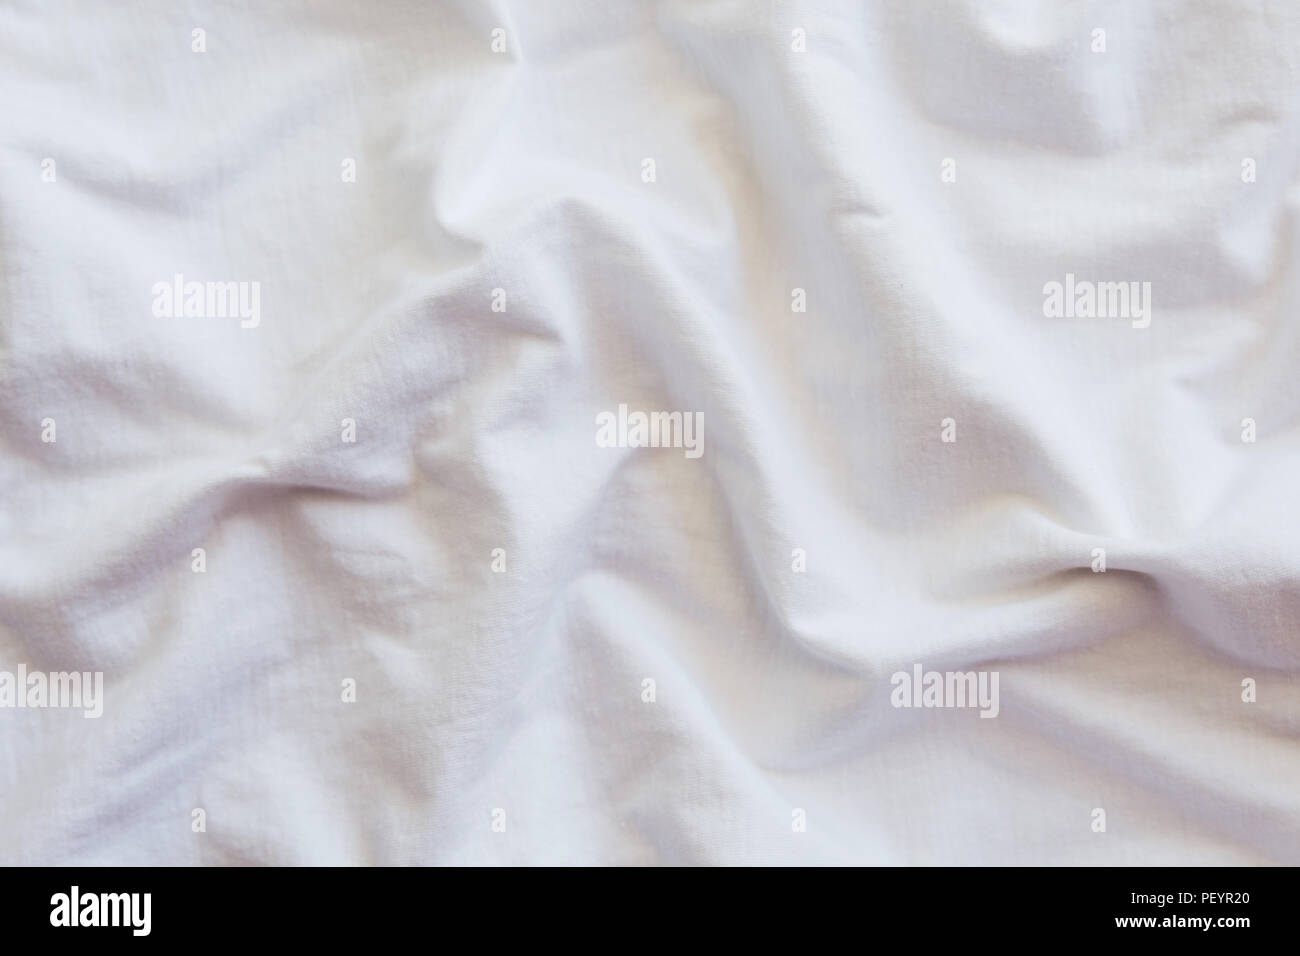 Textura de tela suave fotografías e imágenes de alta resolución - Alamy